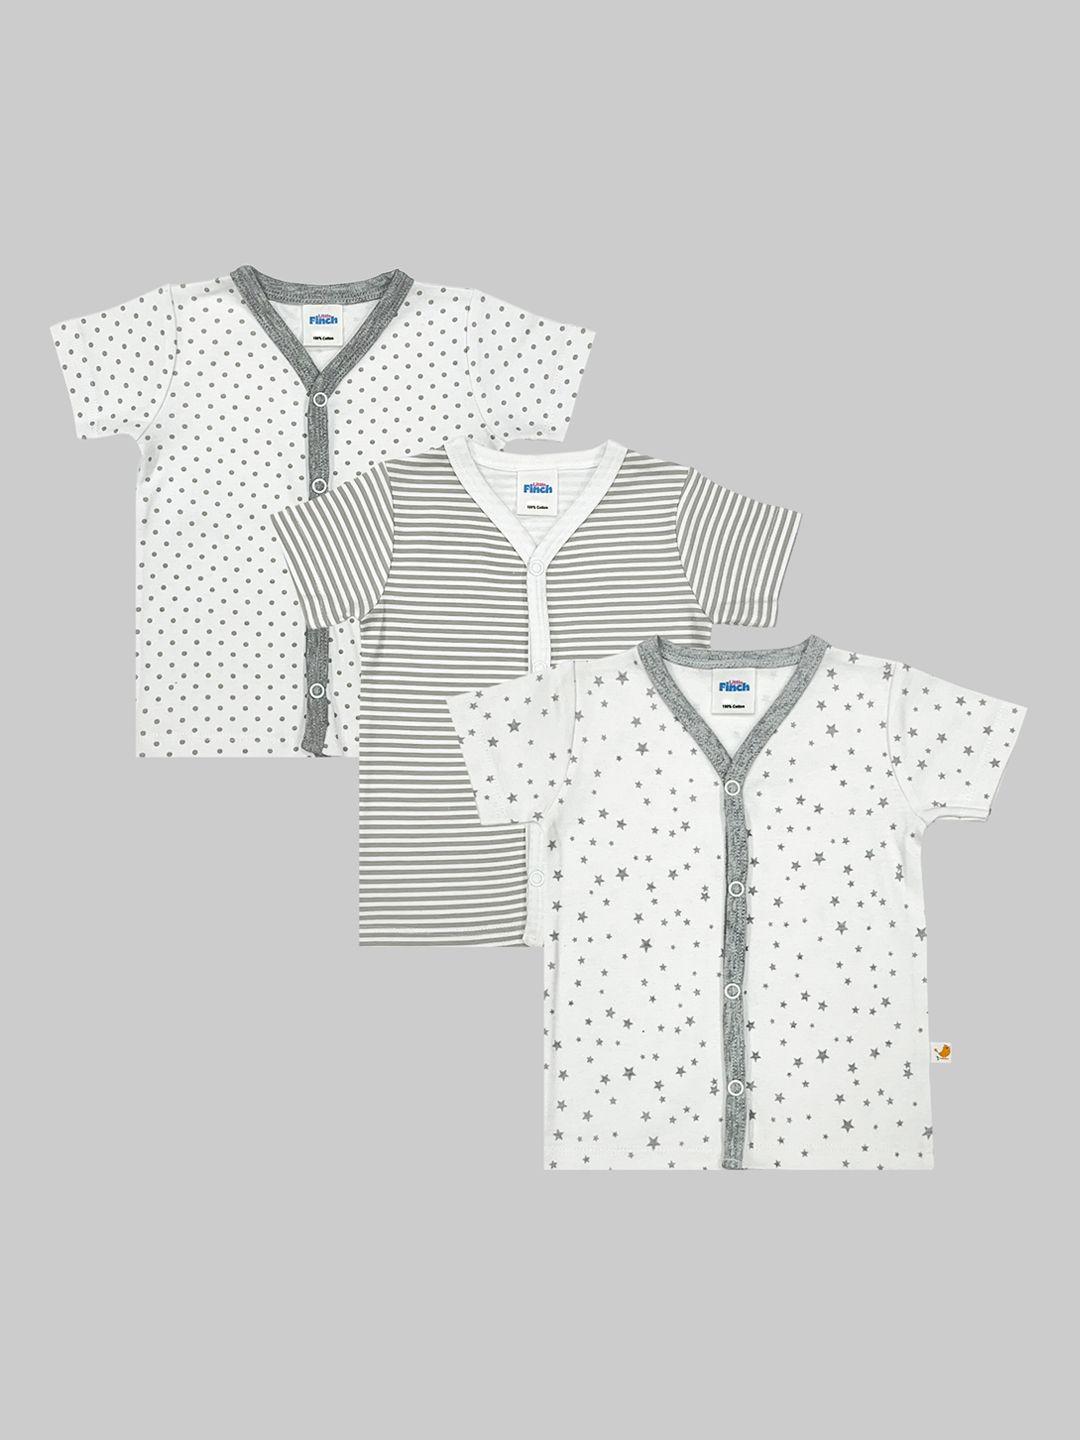 BAESD Infants Boys Pack of 3 Printed Pure Cotton Jablas LF0035 Grey Boys